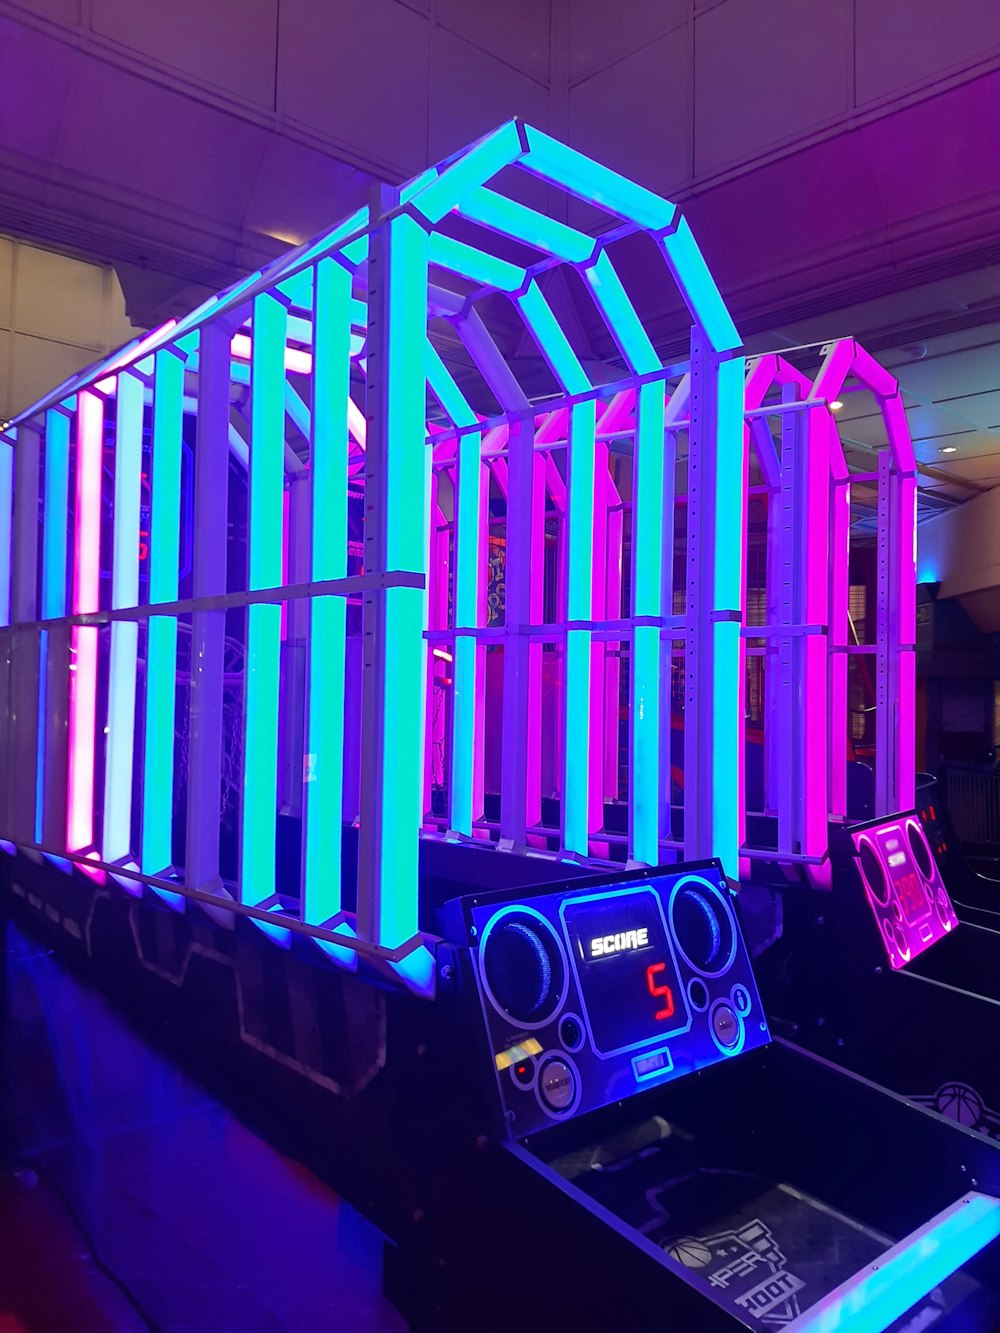 an arcade machine with neon lights on it